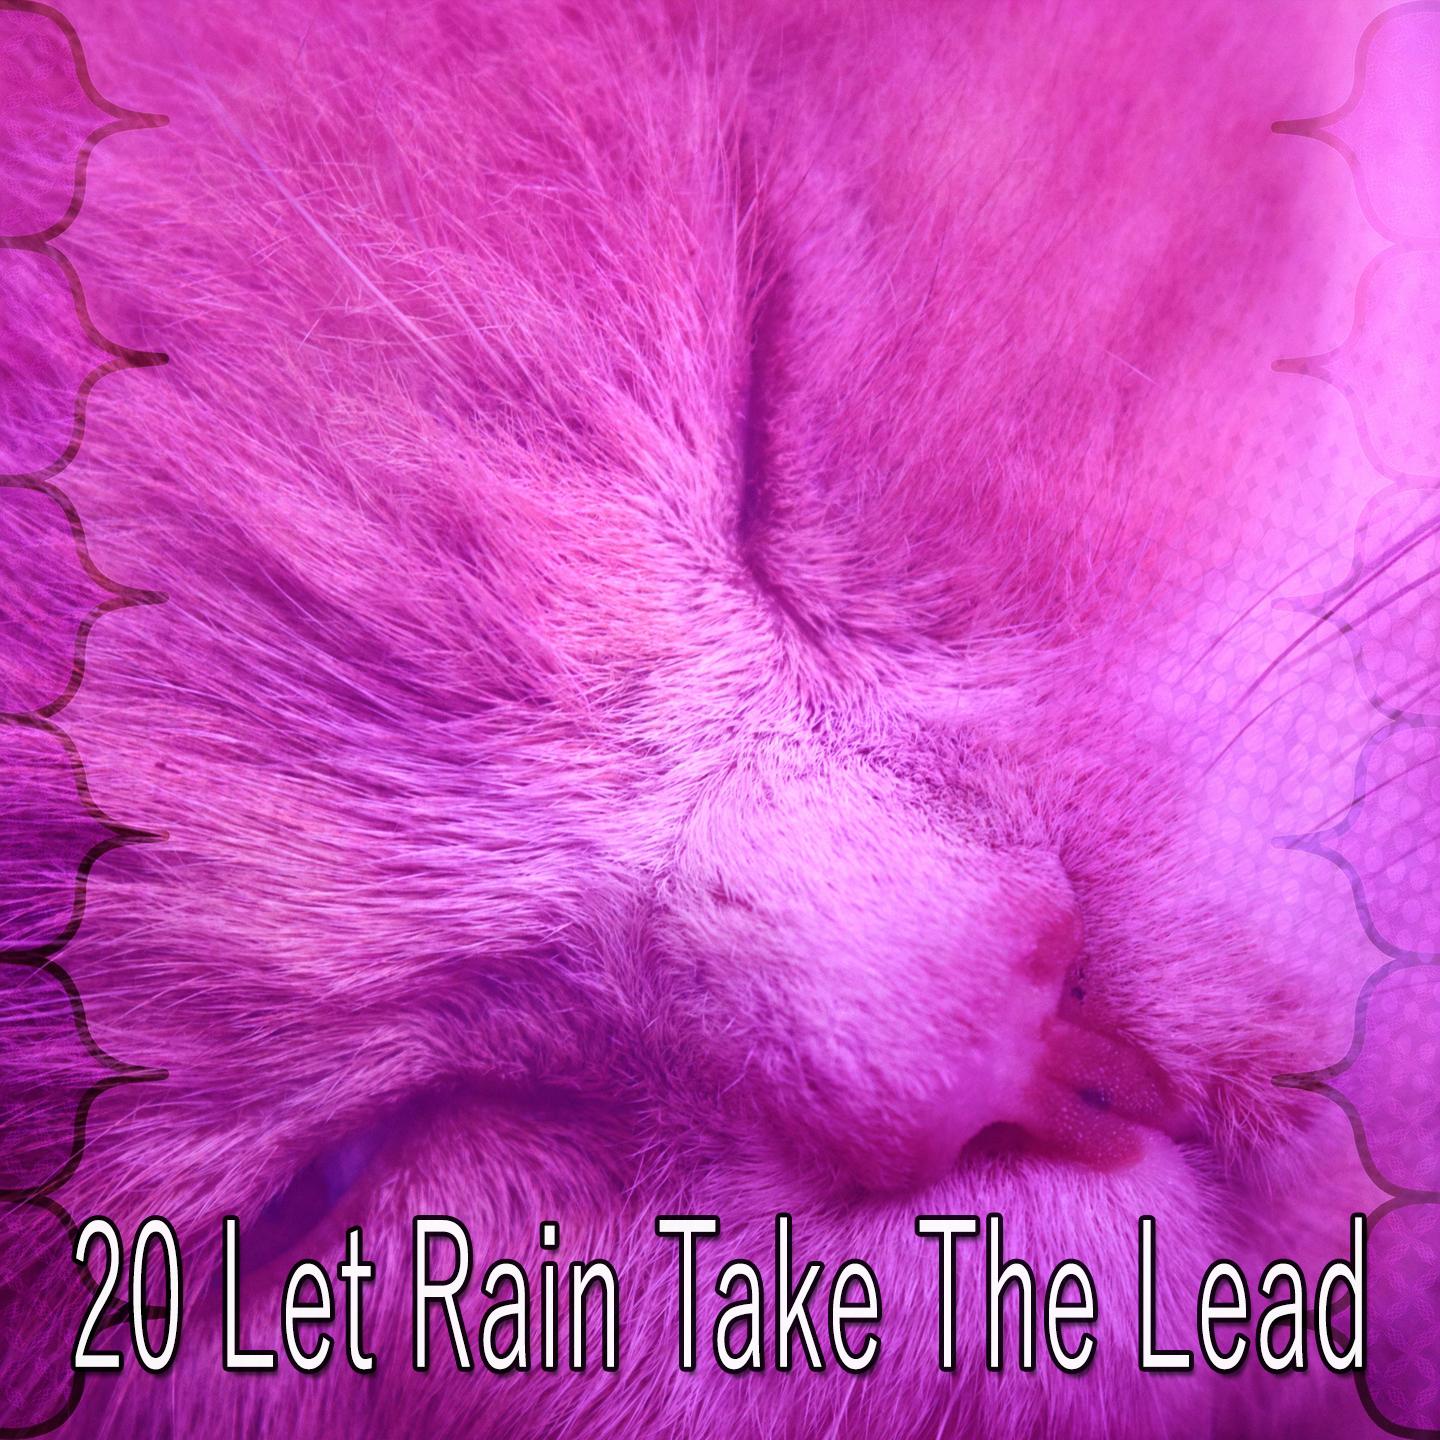 20 Let Rain Take the Lead